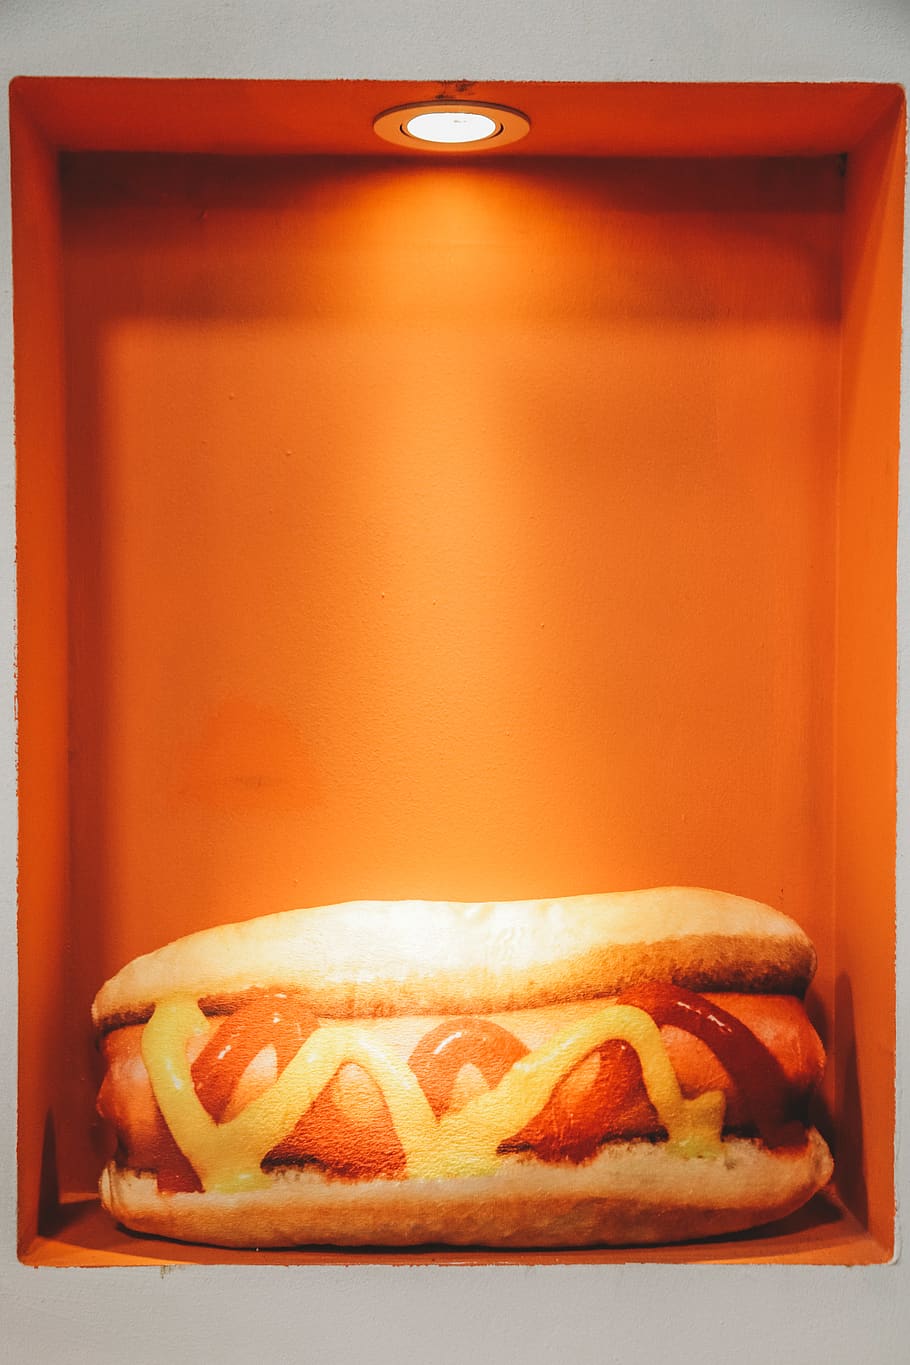 hotdog in bun with ketchup and mustard inside lighted box, burger, HD wallpaper